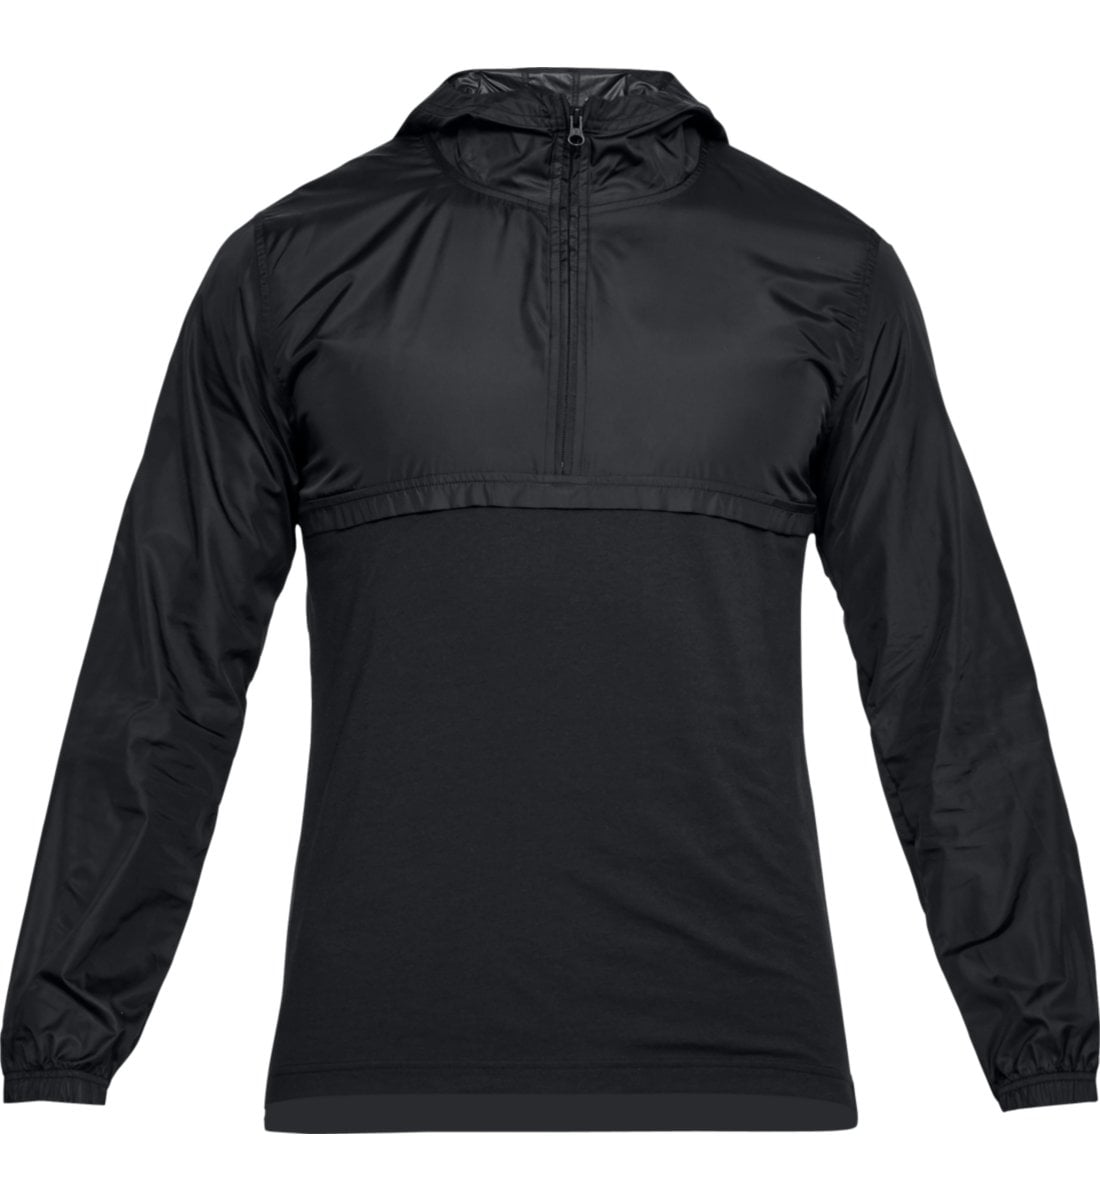 Black New Details about  / Under Armour UA Men/'s Sportstyle Wind Anorak Jacket